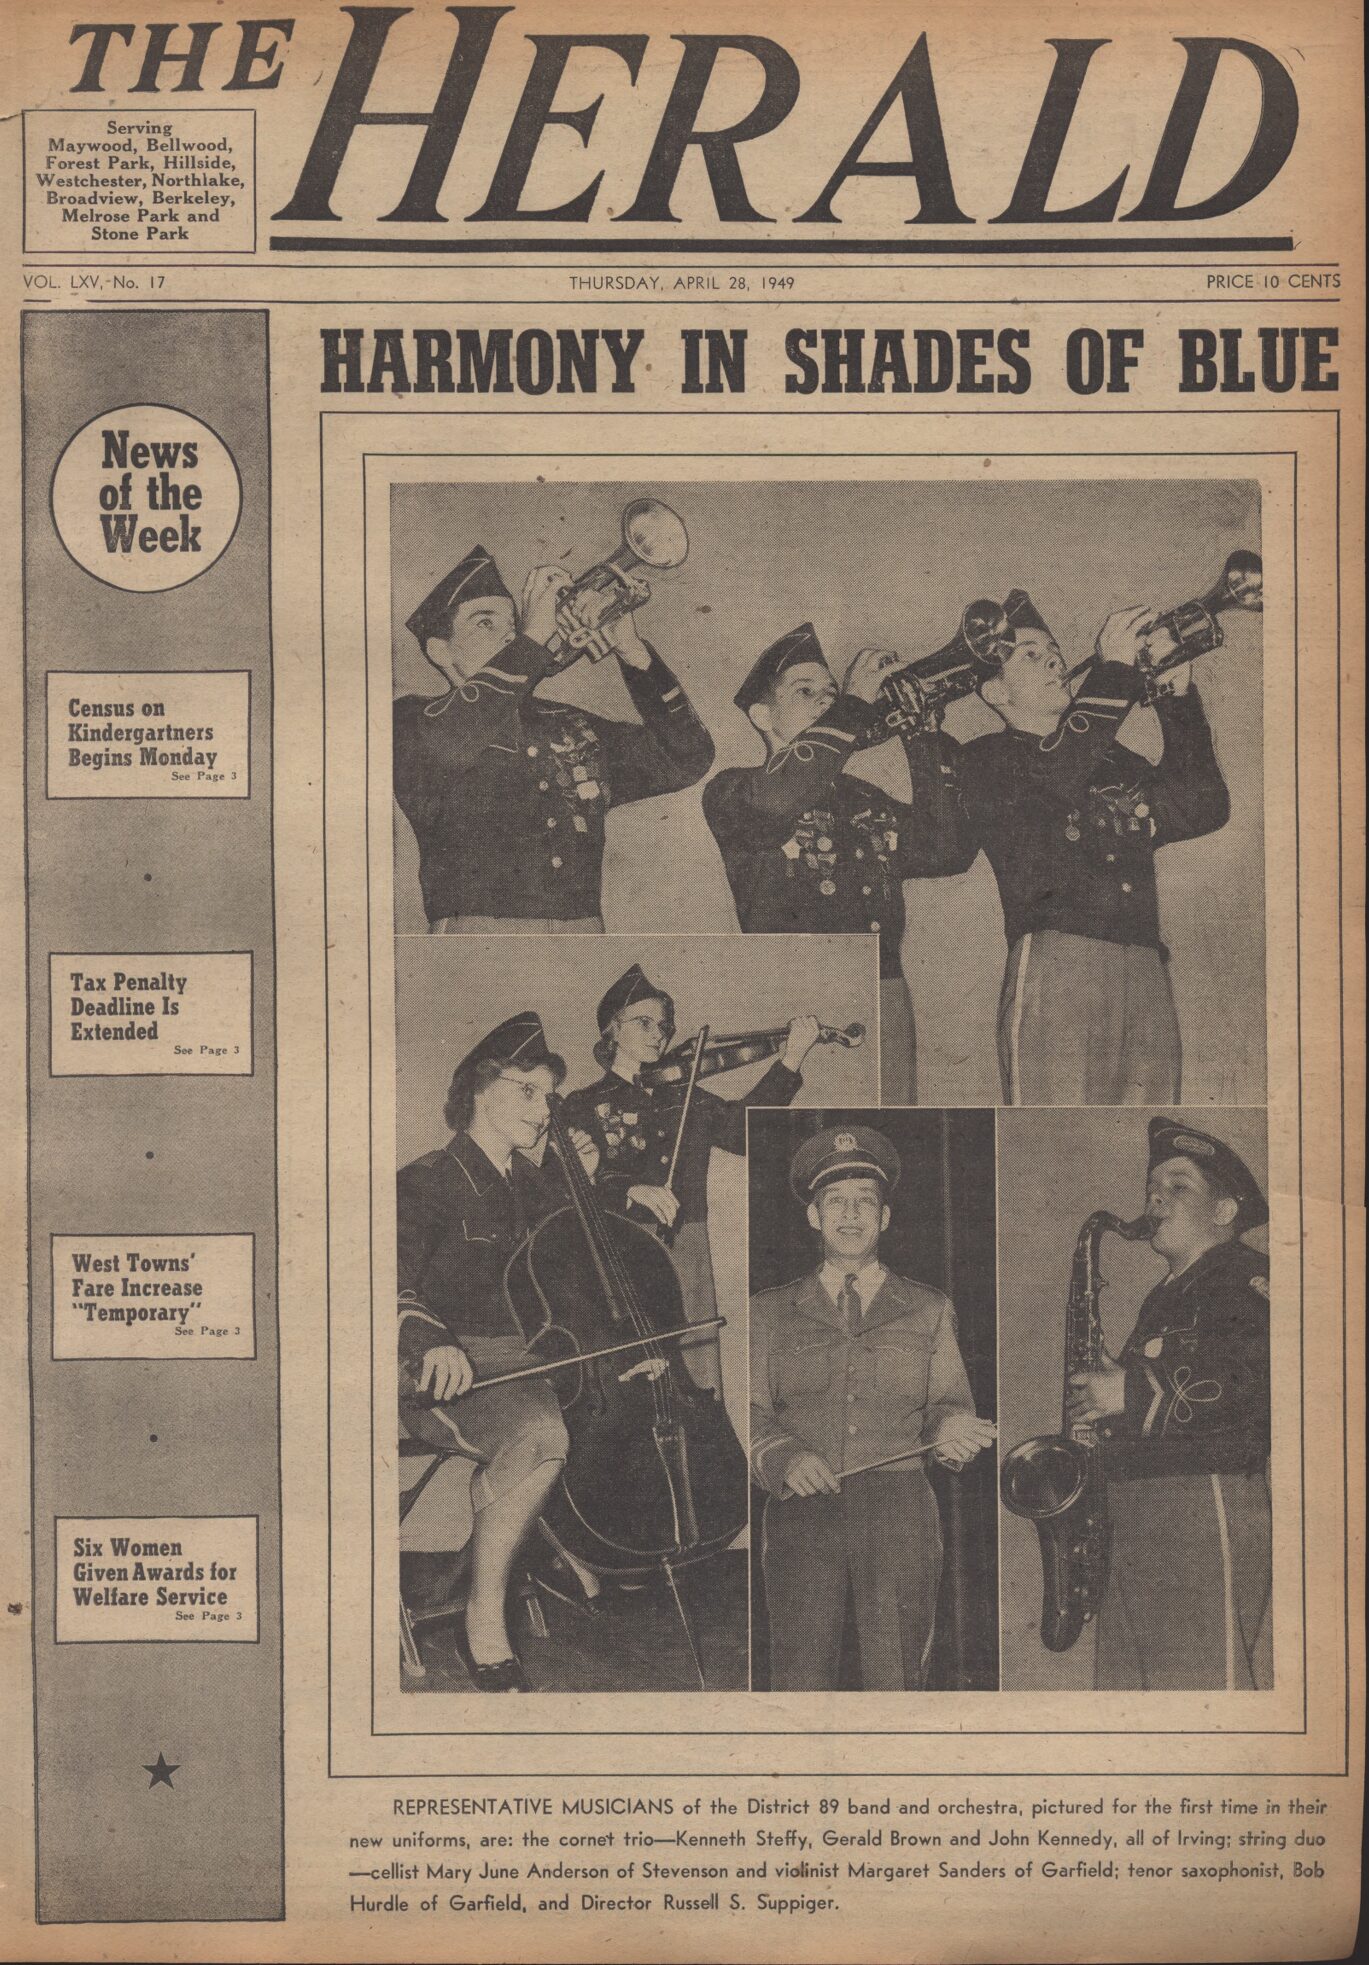 The Herald – 19490428